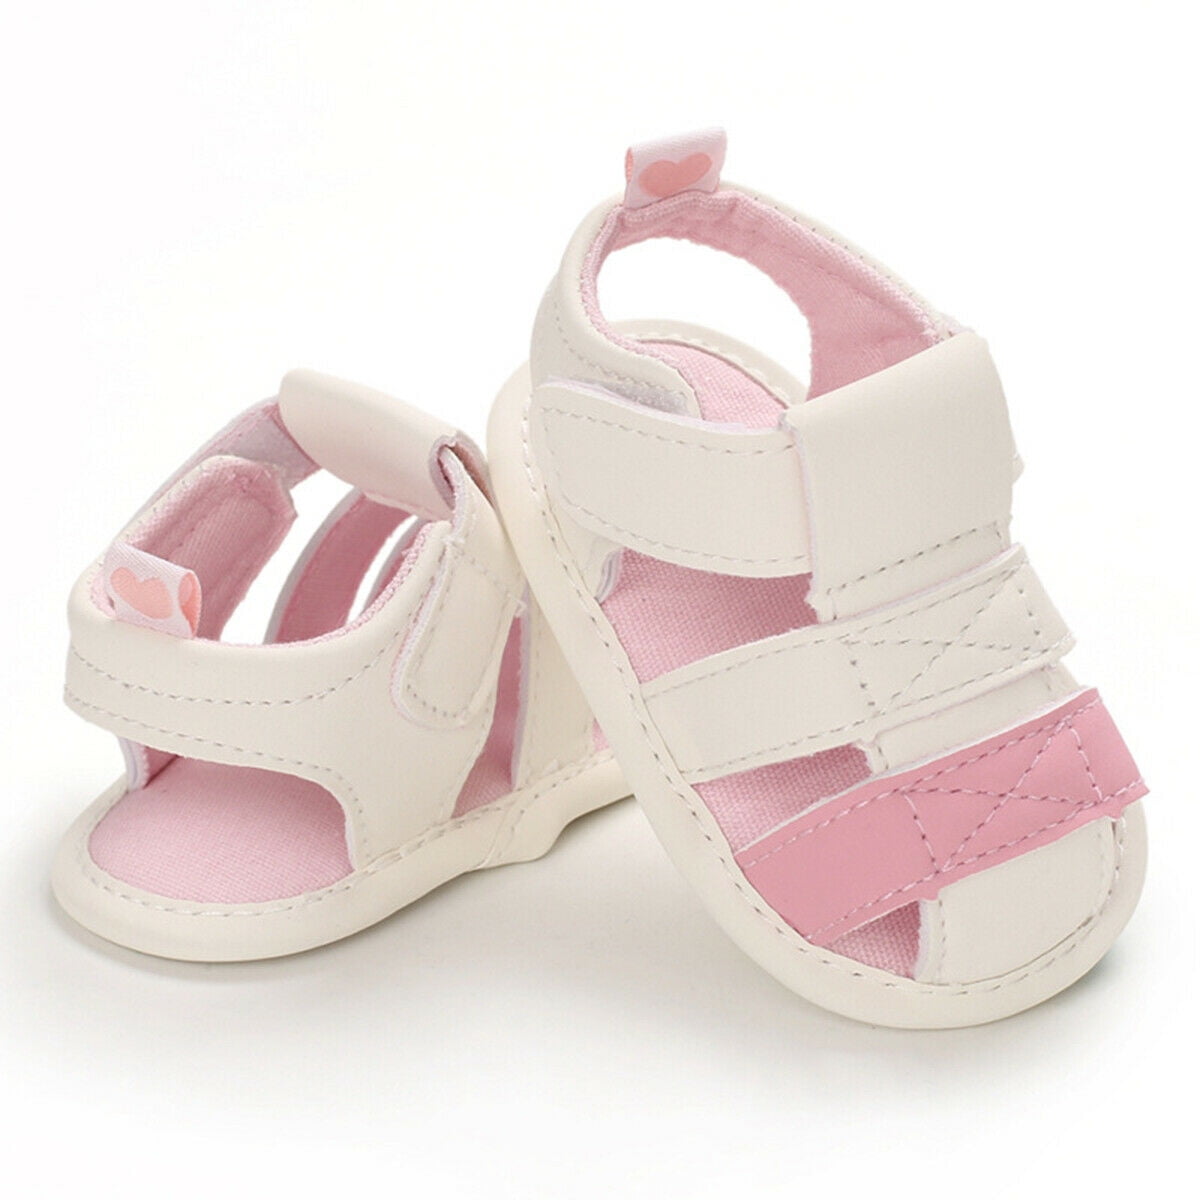 infant flower girl shoes